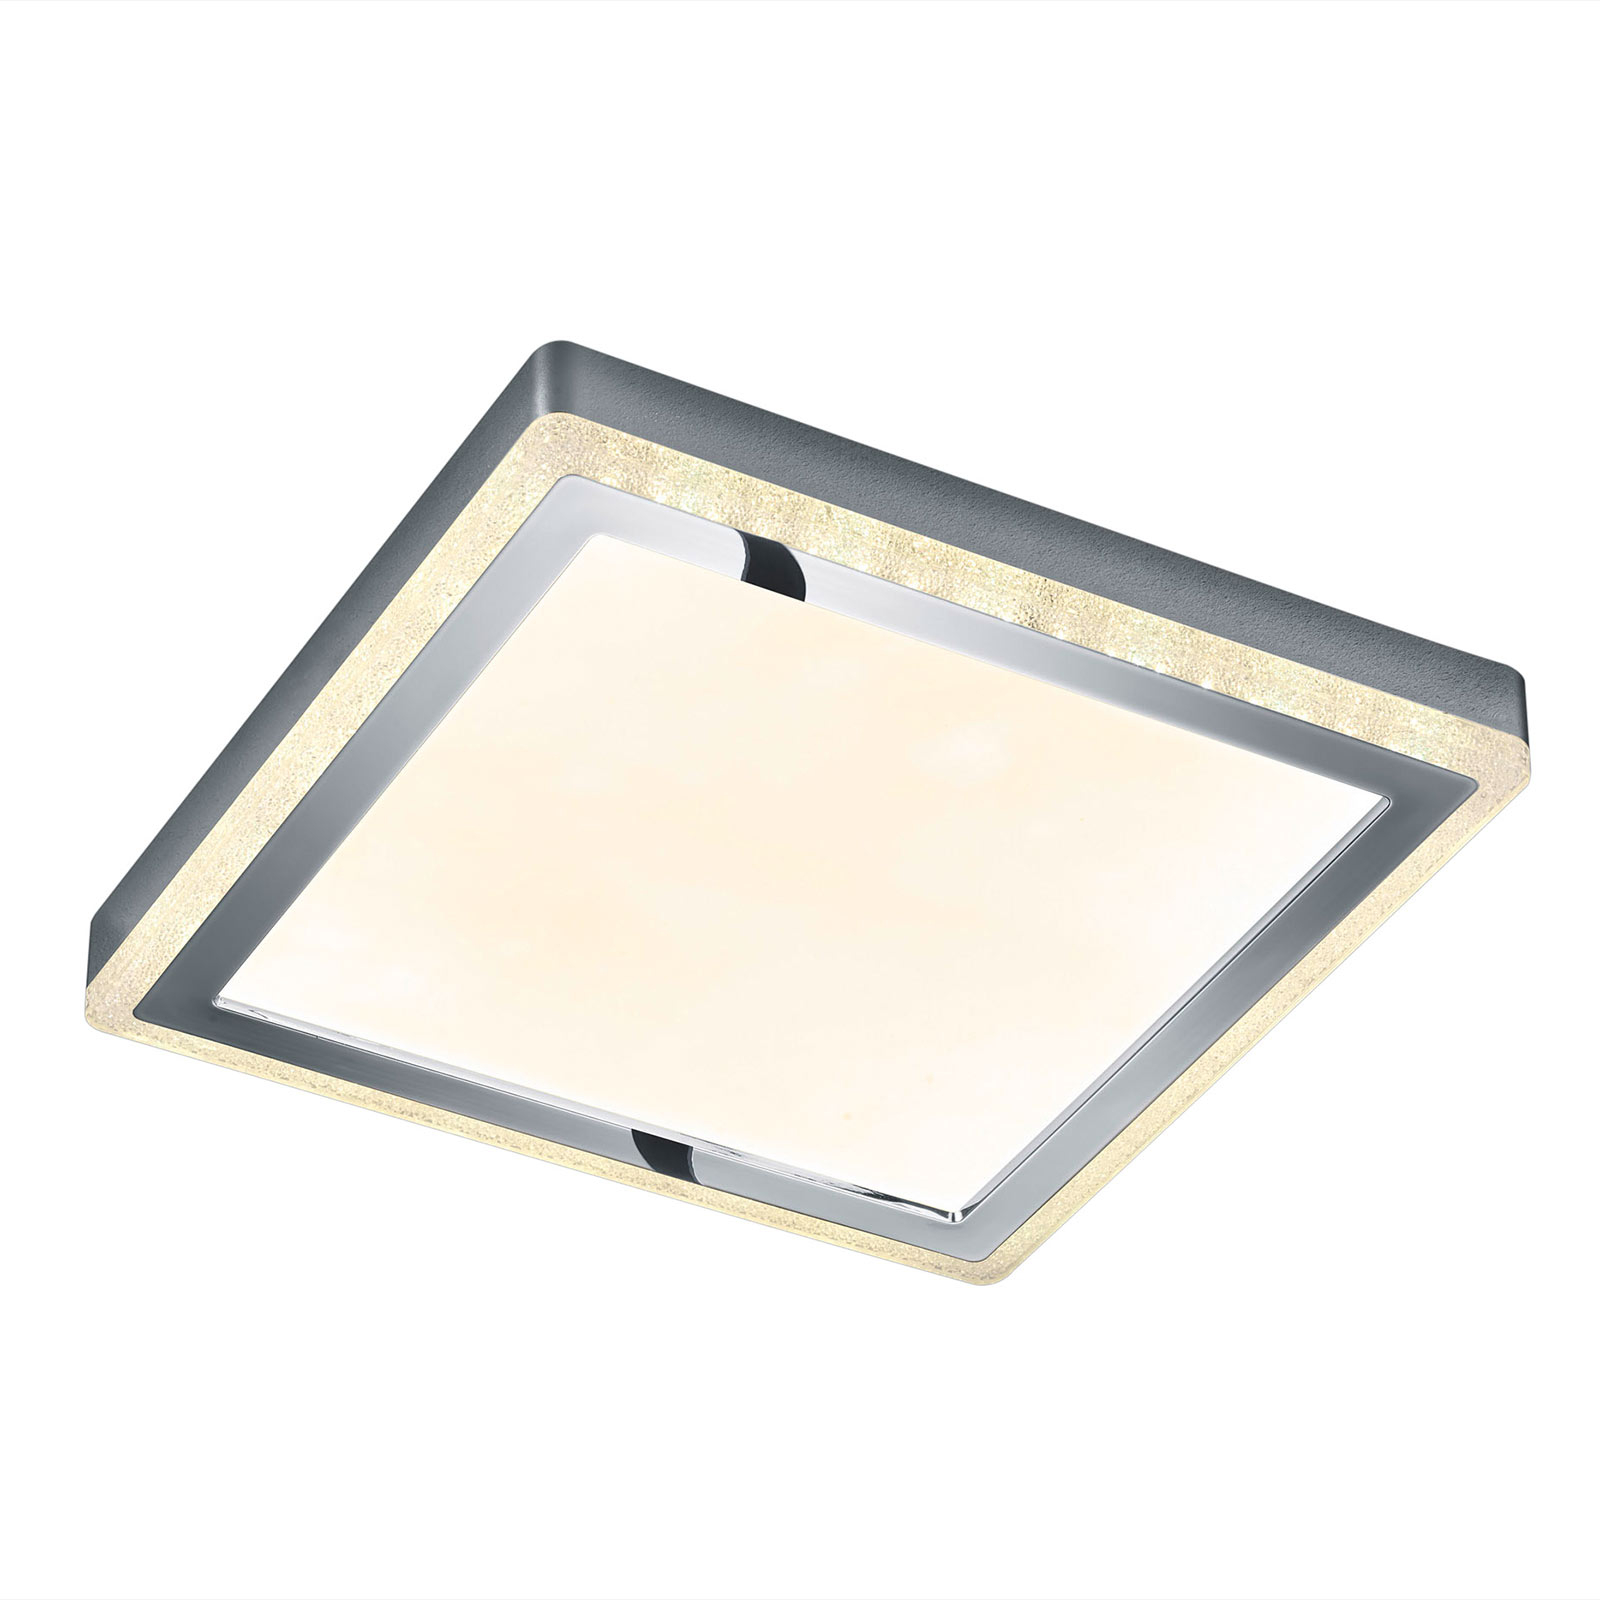 LED plafondlamp Slide, wit, hoekig, 40x40 cm